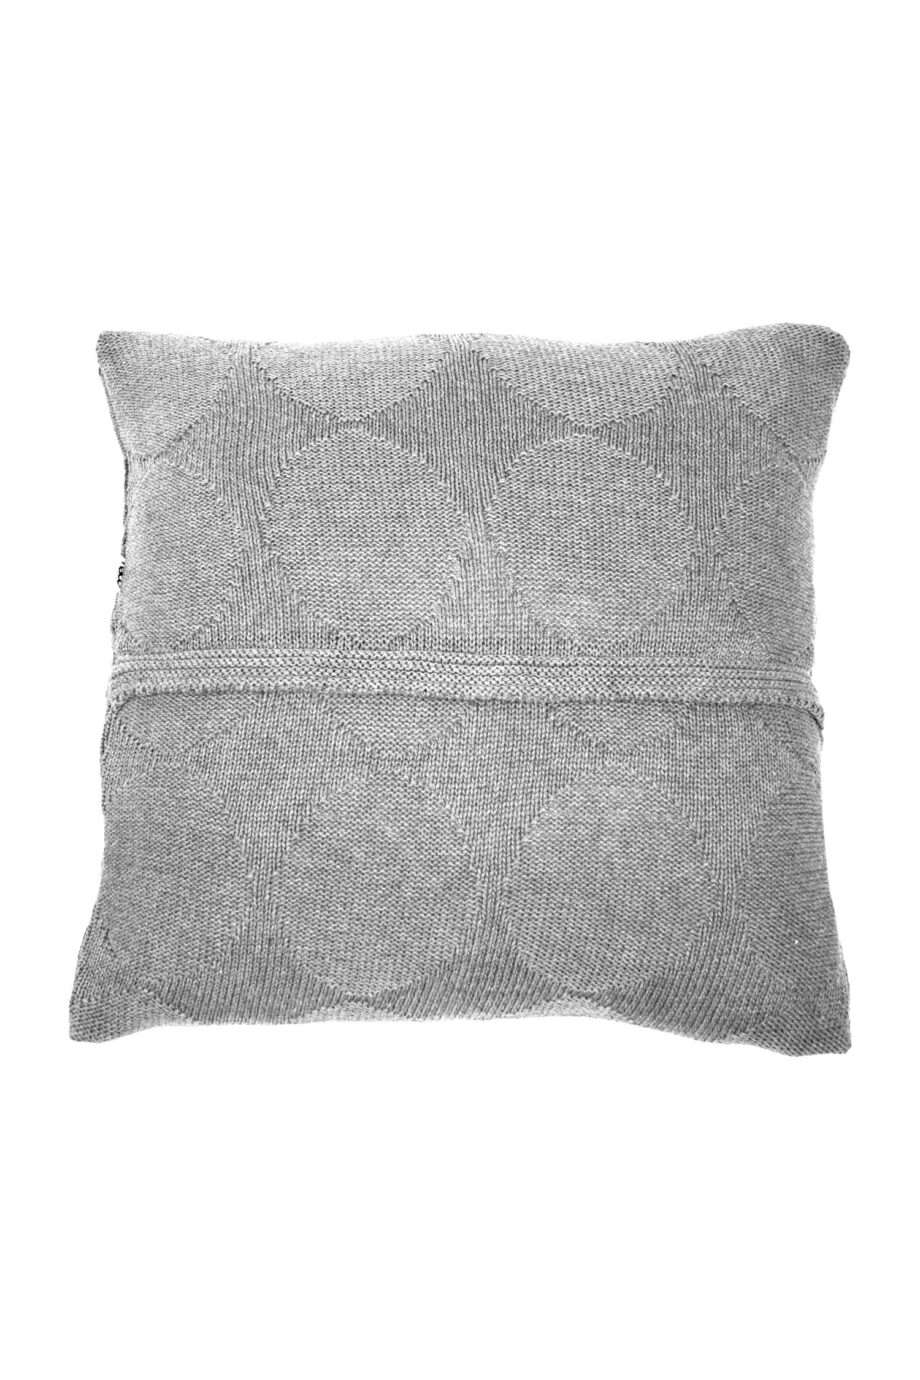 spots light grey knitted cotton pillowcase medium